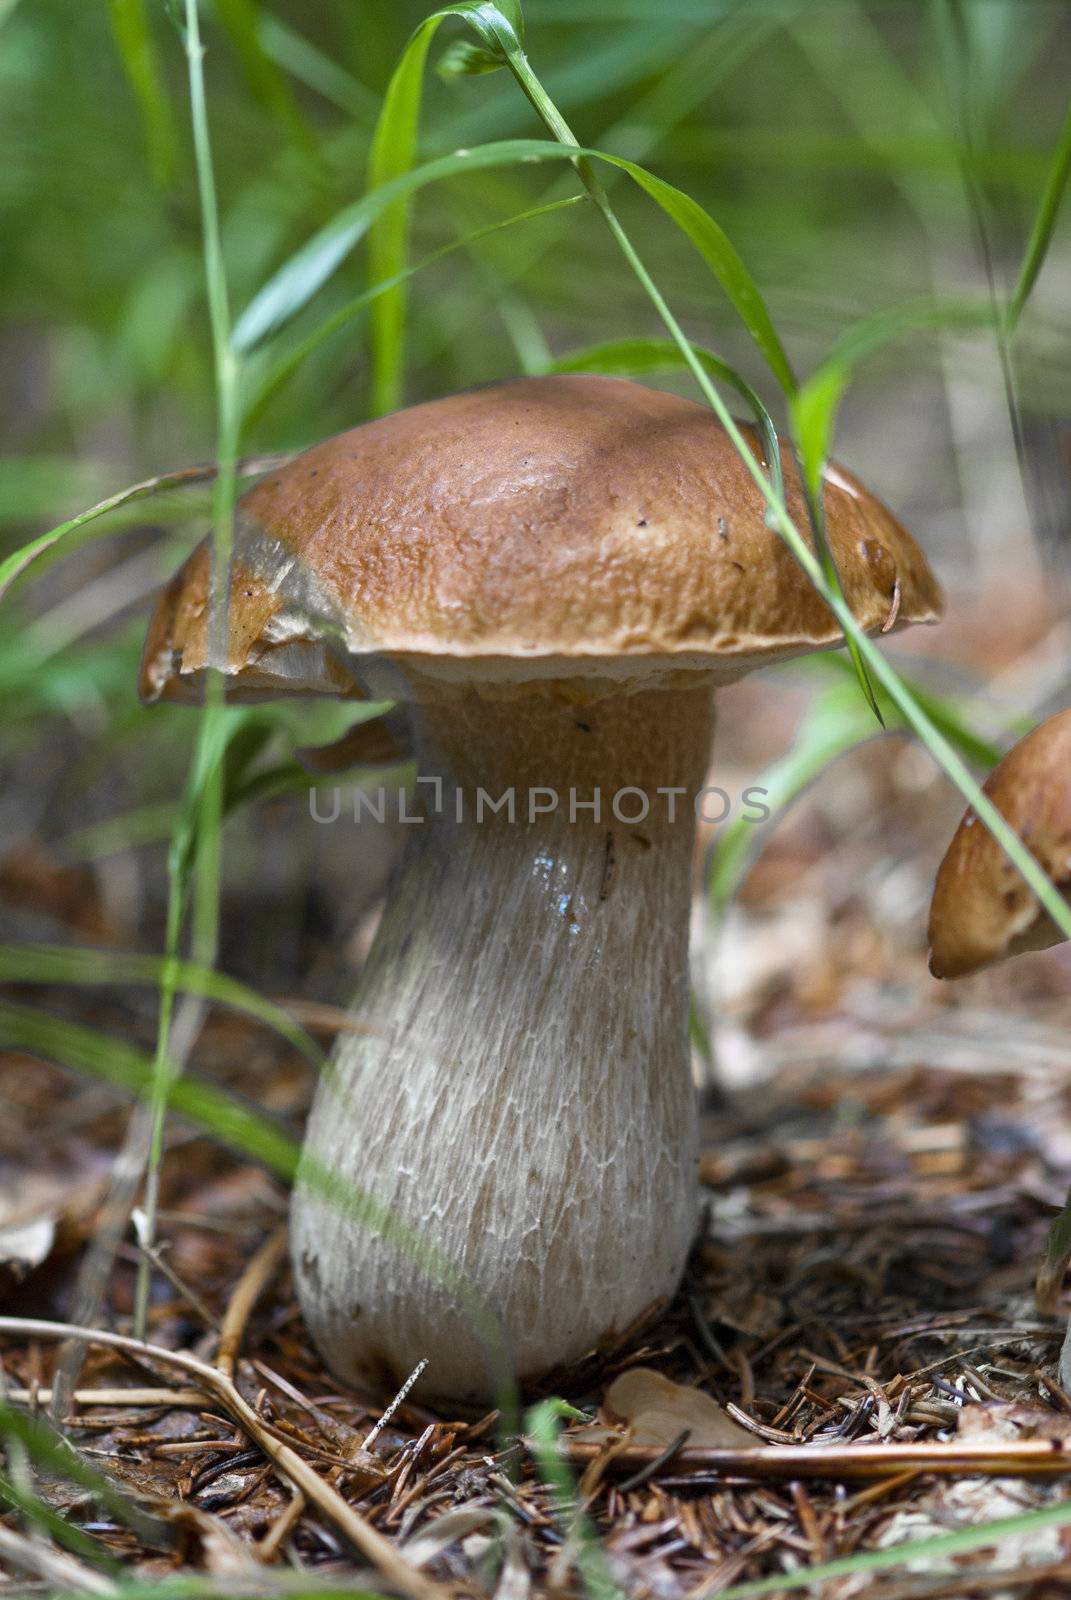 Boletus Mushroom in Dolomites Woods, Italy